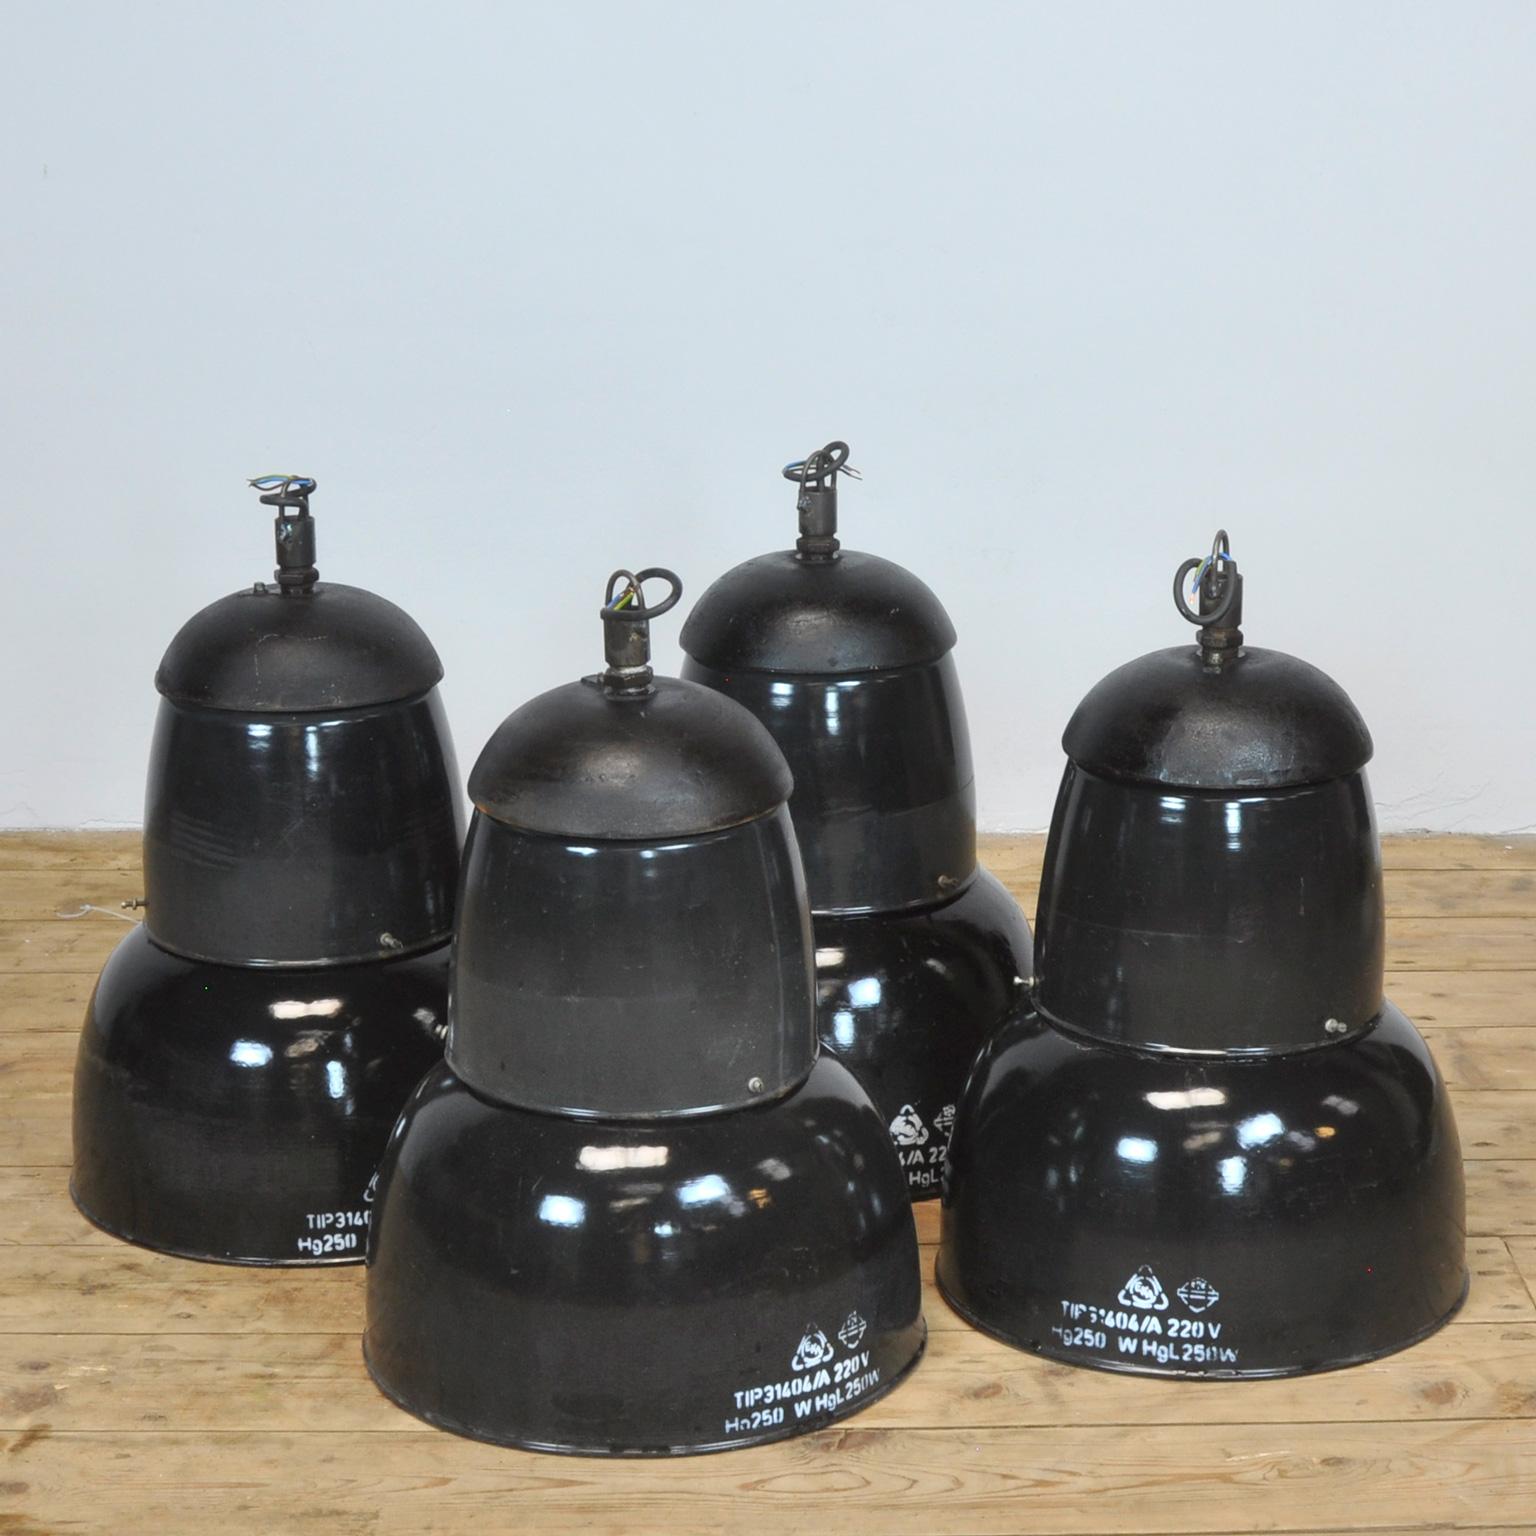 Enameled Industrial Lamp, Factory Pendant Light in Black Finish, 1950s